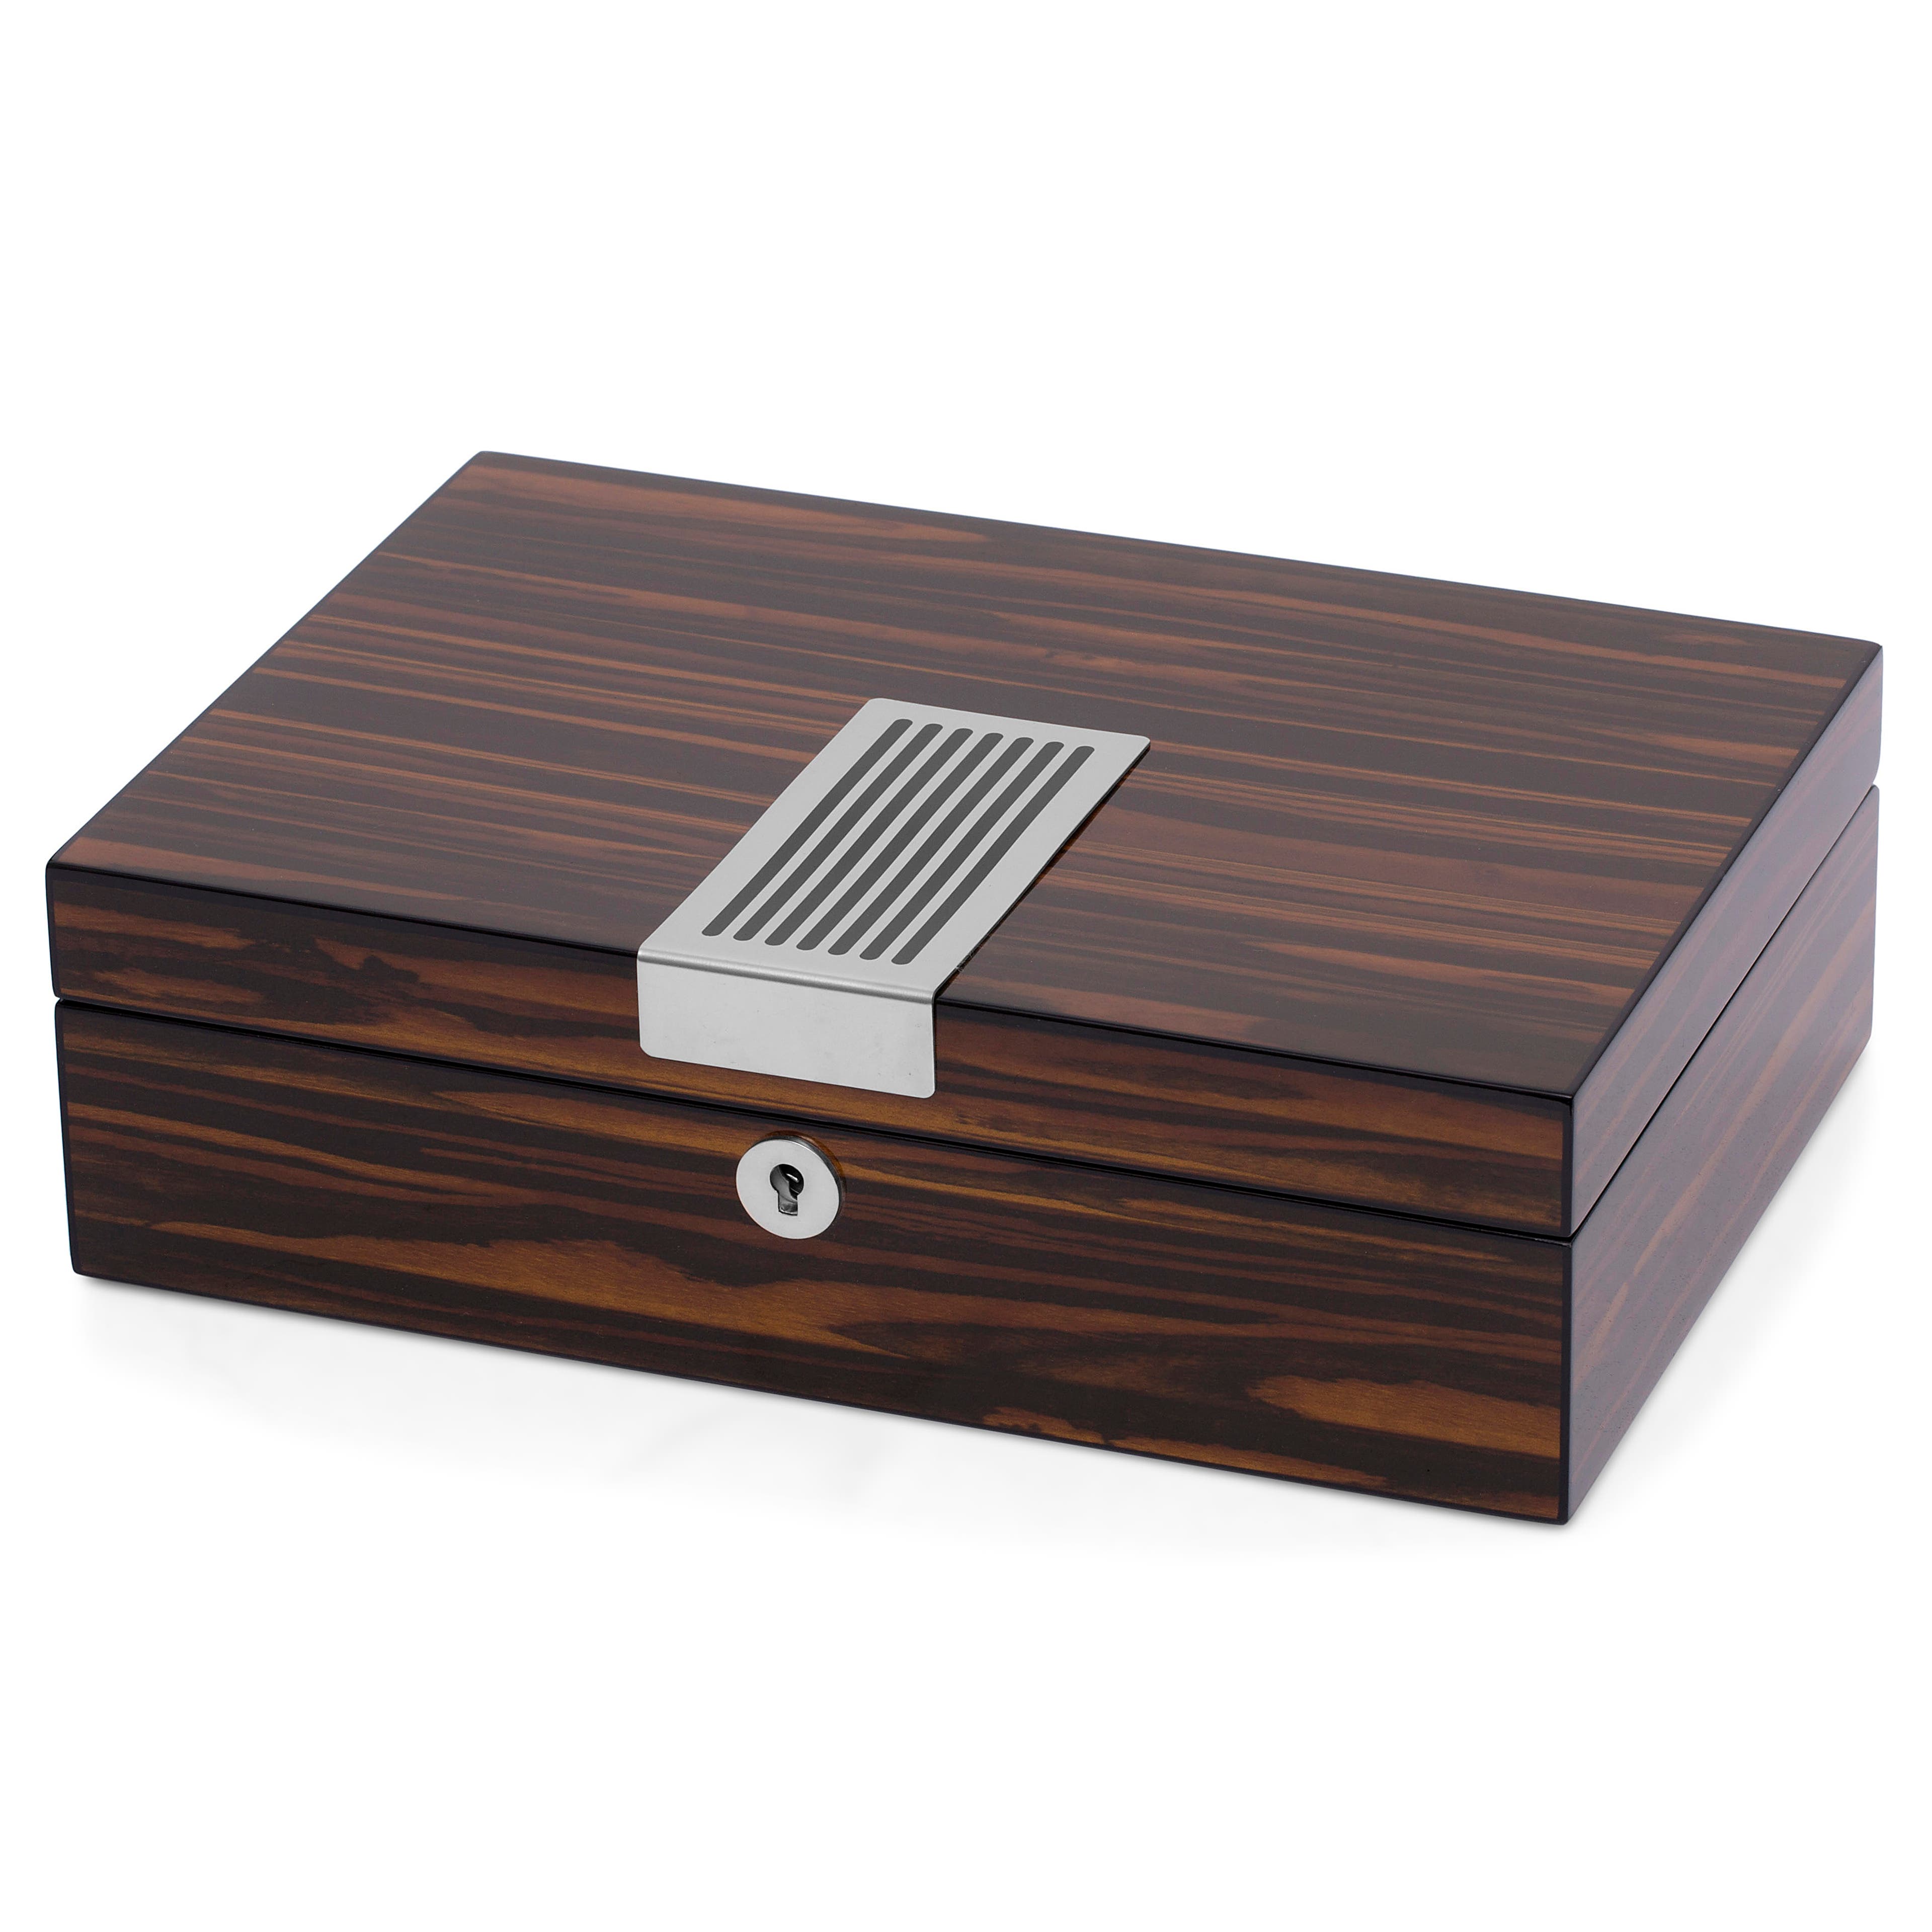 Caja de madera de ébano para 8 relojes